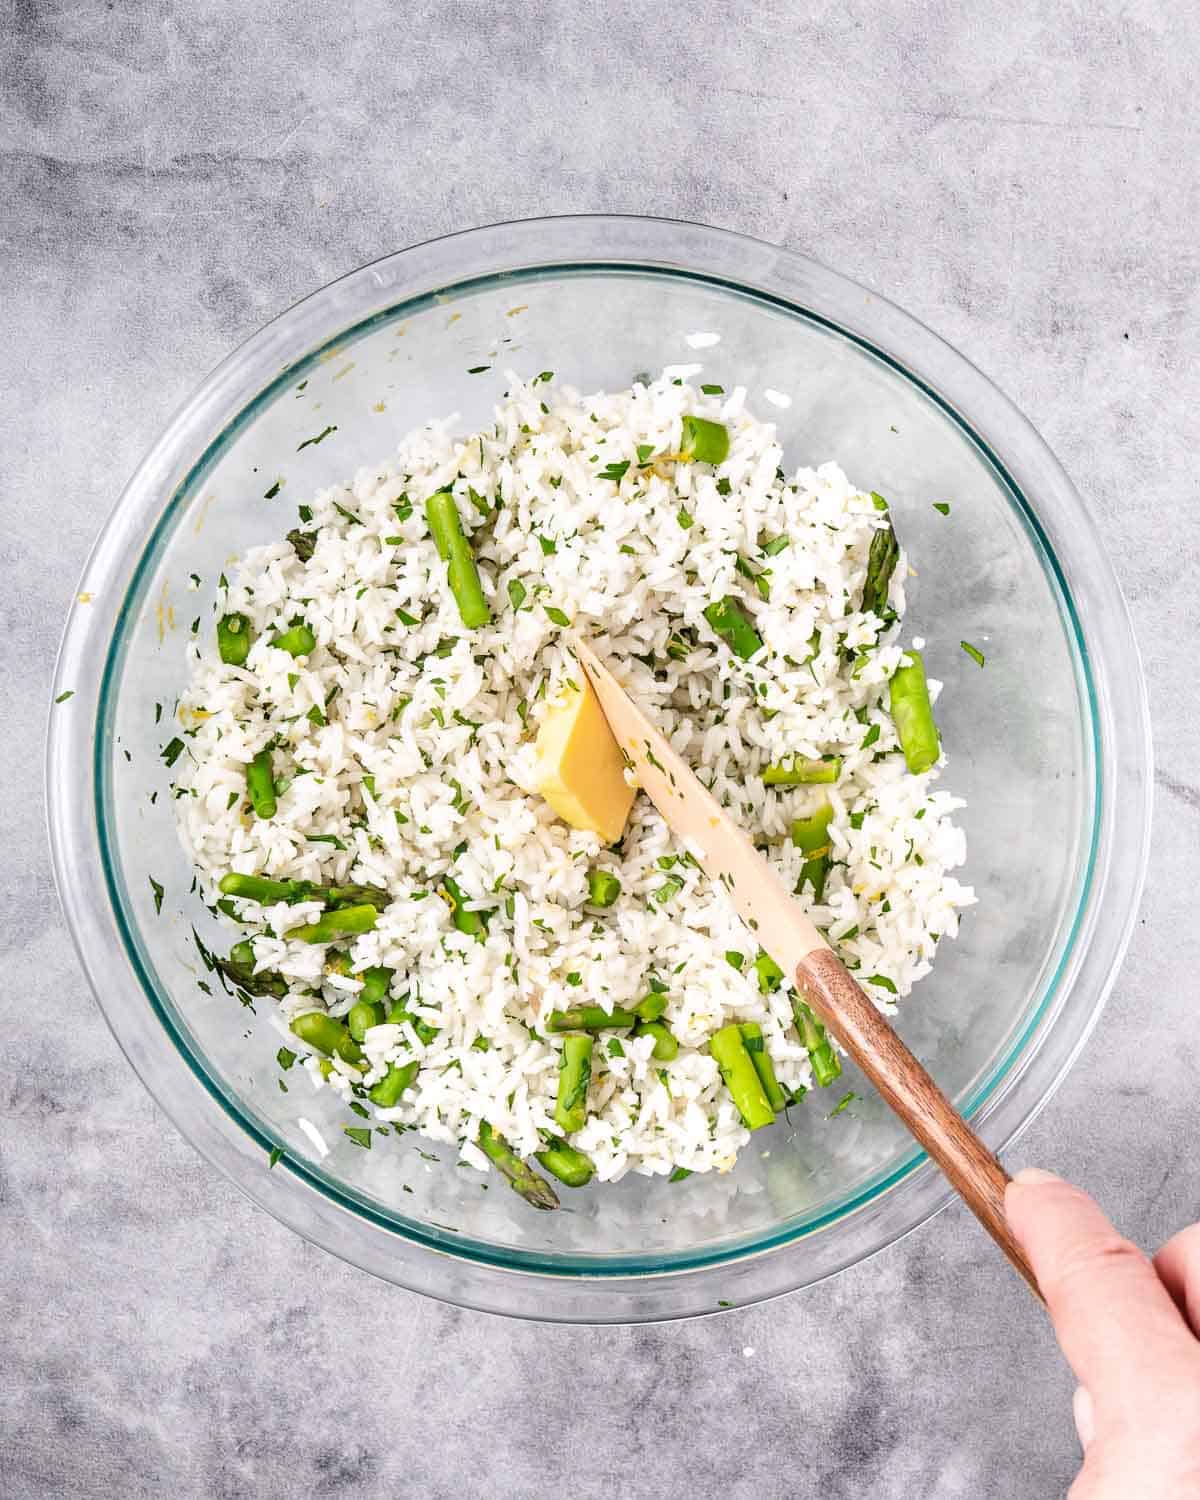 Lemon asparagus rice in a bowl.